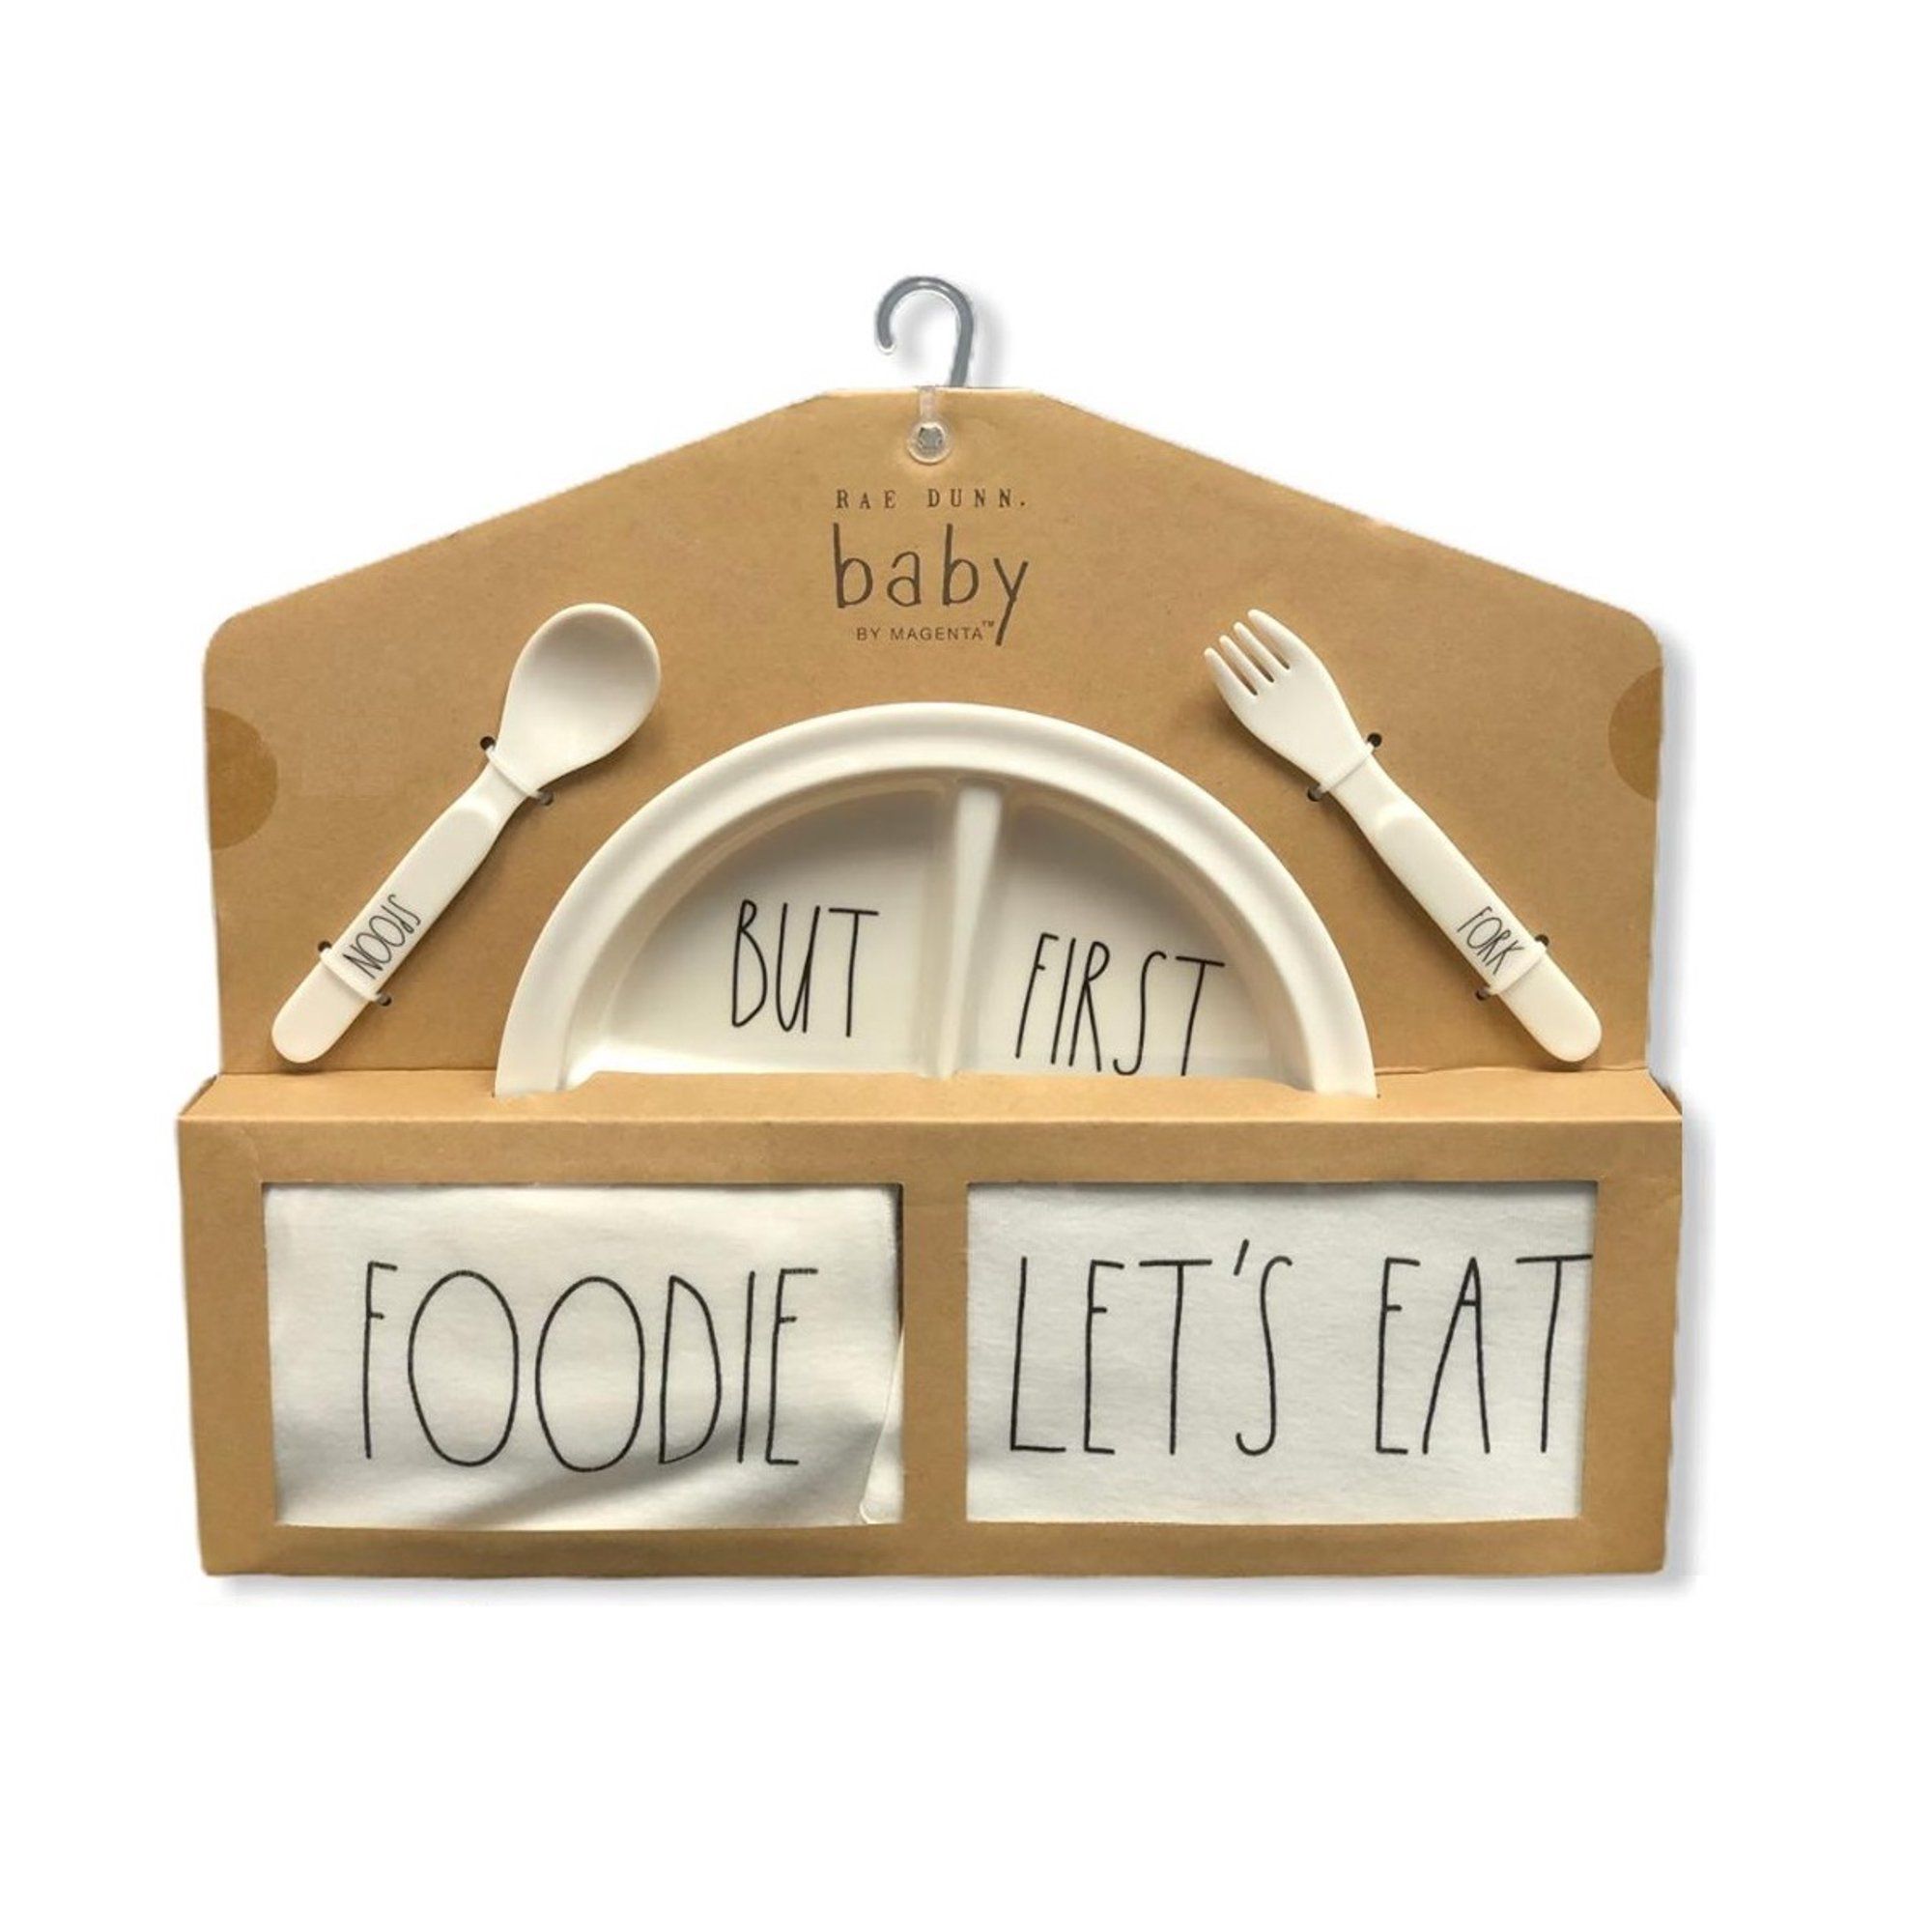 Rae Dunn Baby 5 Piece Gift Set: Plate Bib Bodysuit Utensils (3-6 Months) Foodie | Walmart (US)